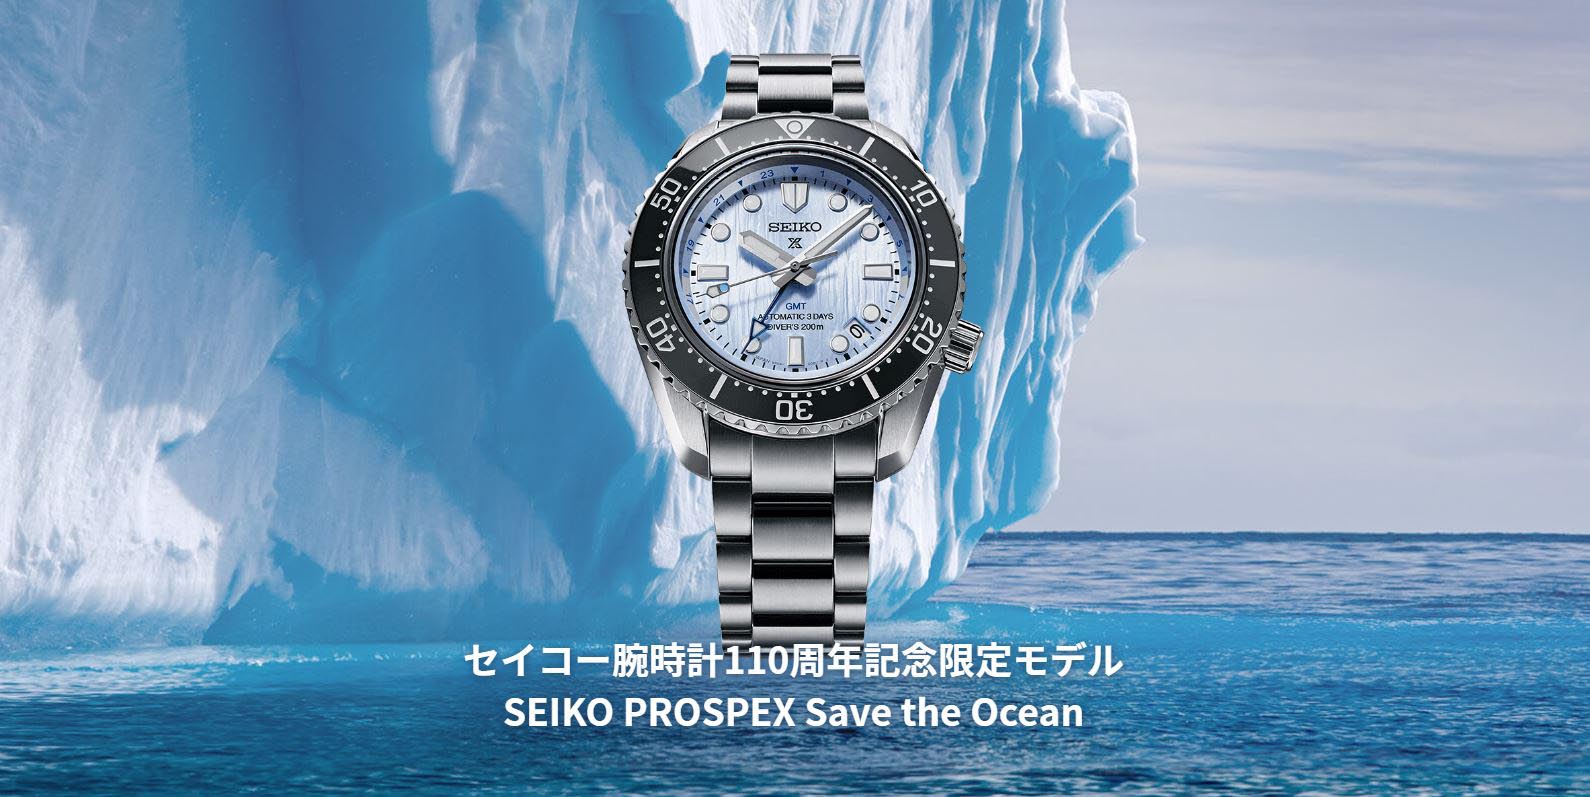 Seiko Prospex 1968 Diver’s Modern Re-Interpretation GMT